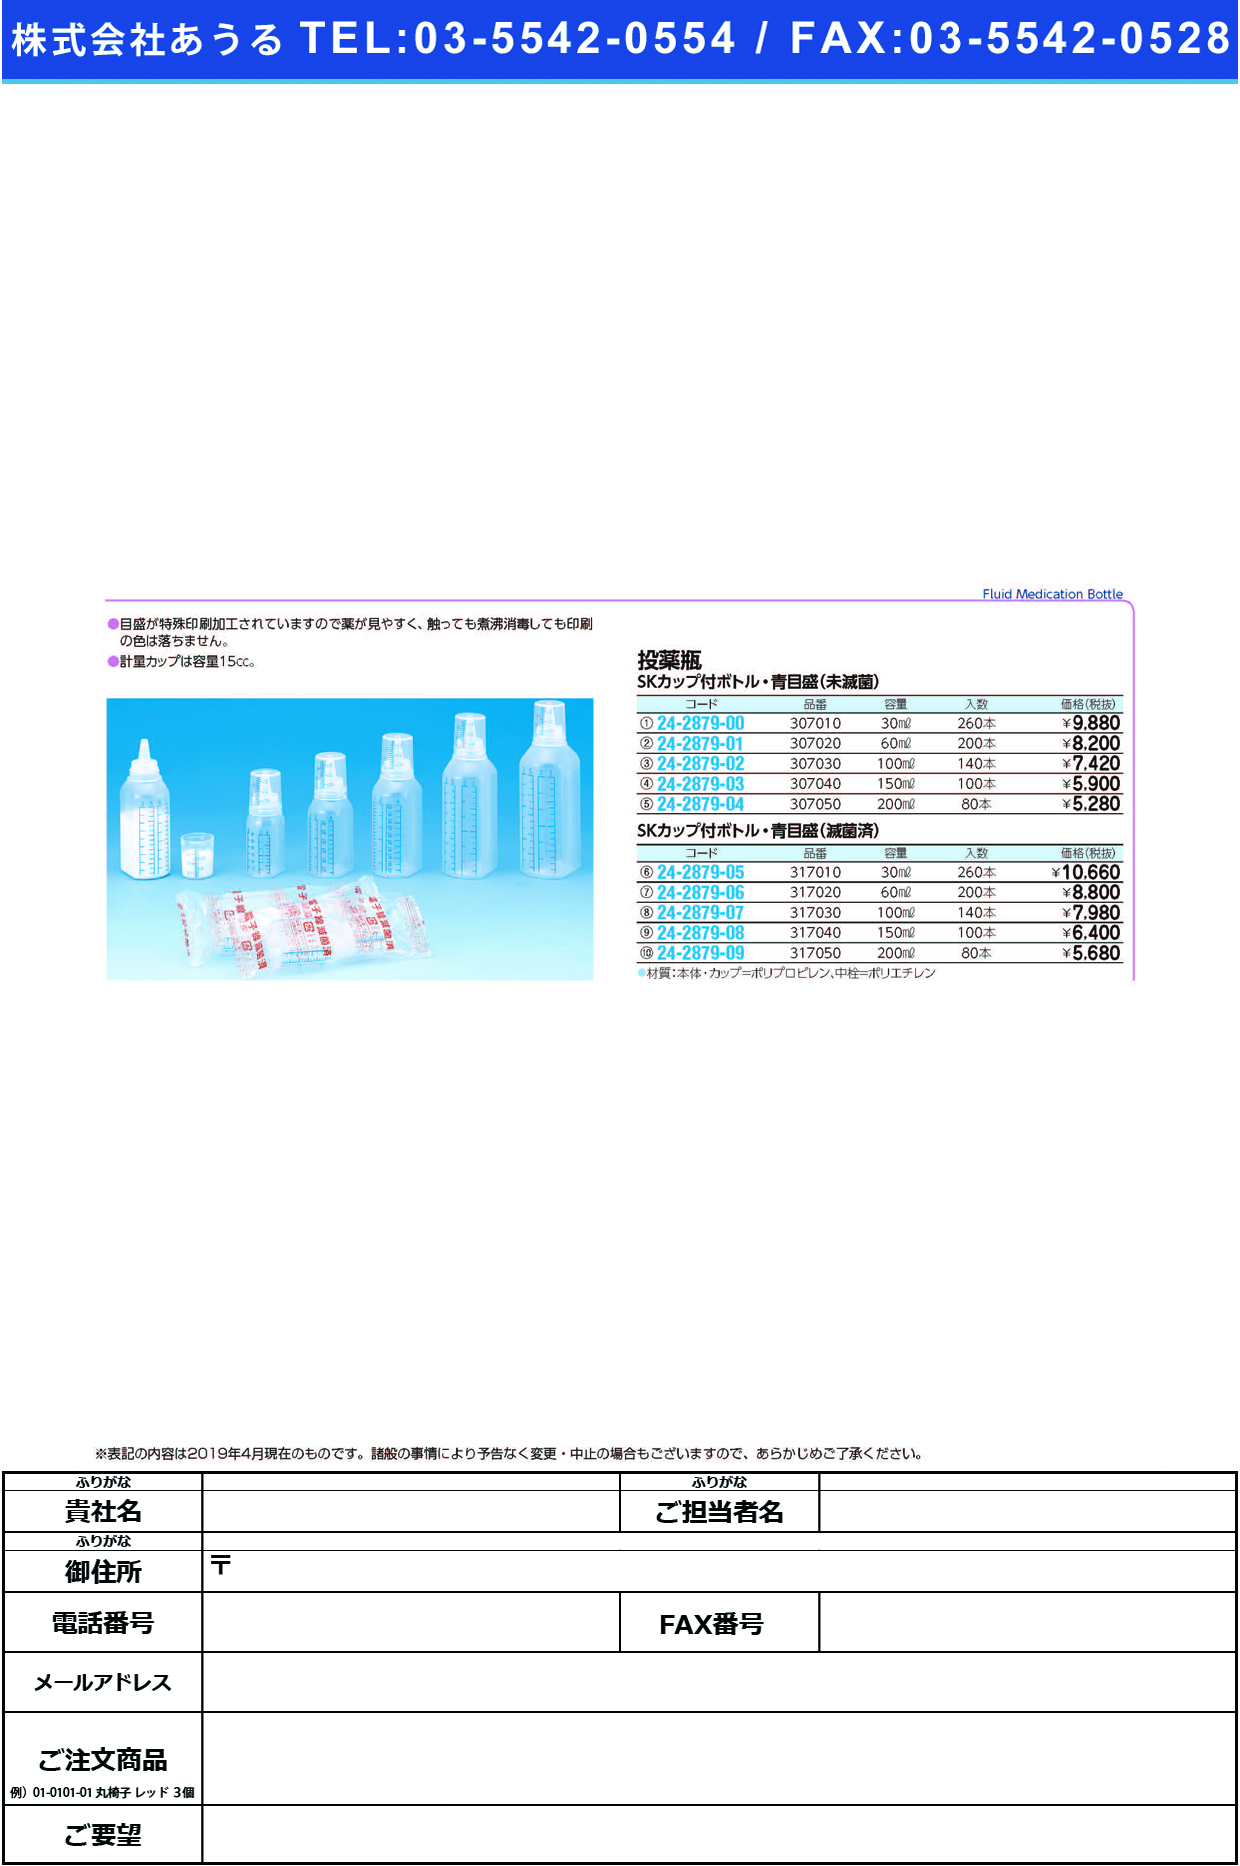 (24-2879-05)ＳＫカップ付ボトル青目盛（滅菌済） 30ML(260ﾎﾝｲﾘ) SKｶｯﾌﾟﾂｷﾎﾞﾄﾙﾒｯｷﾝｽﾞﾐ【1袋単位】【2019年カタログ商品】